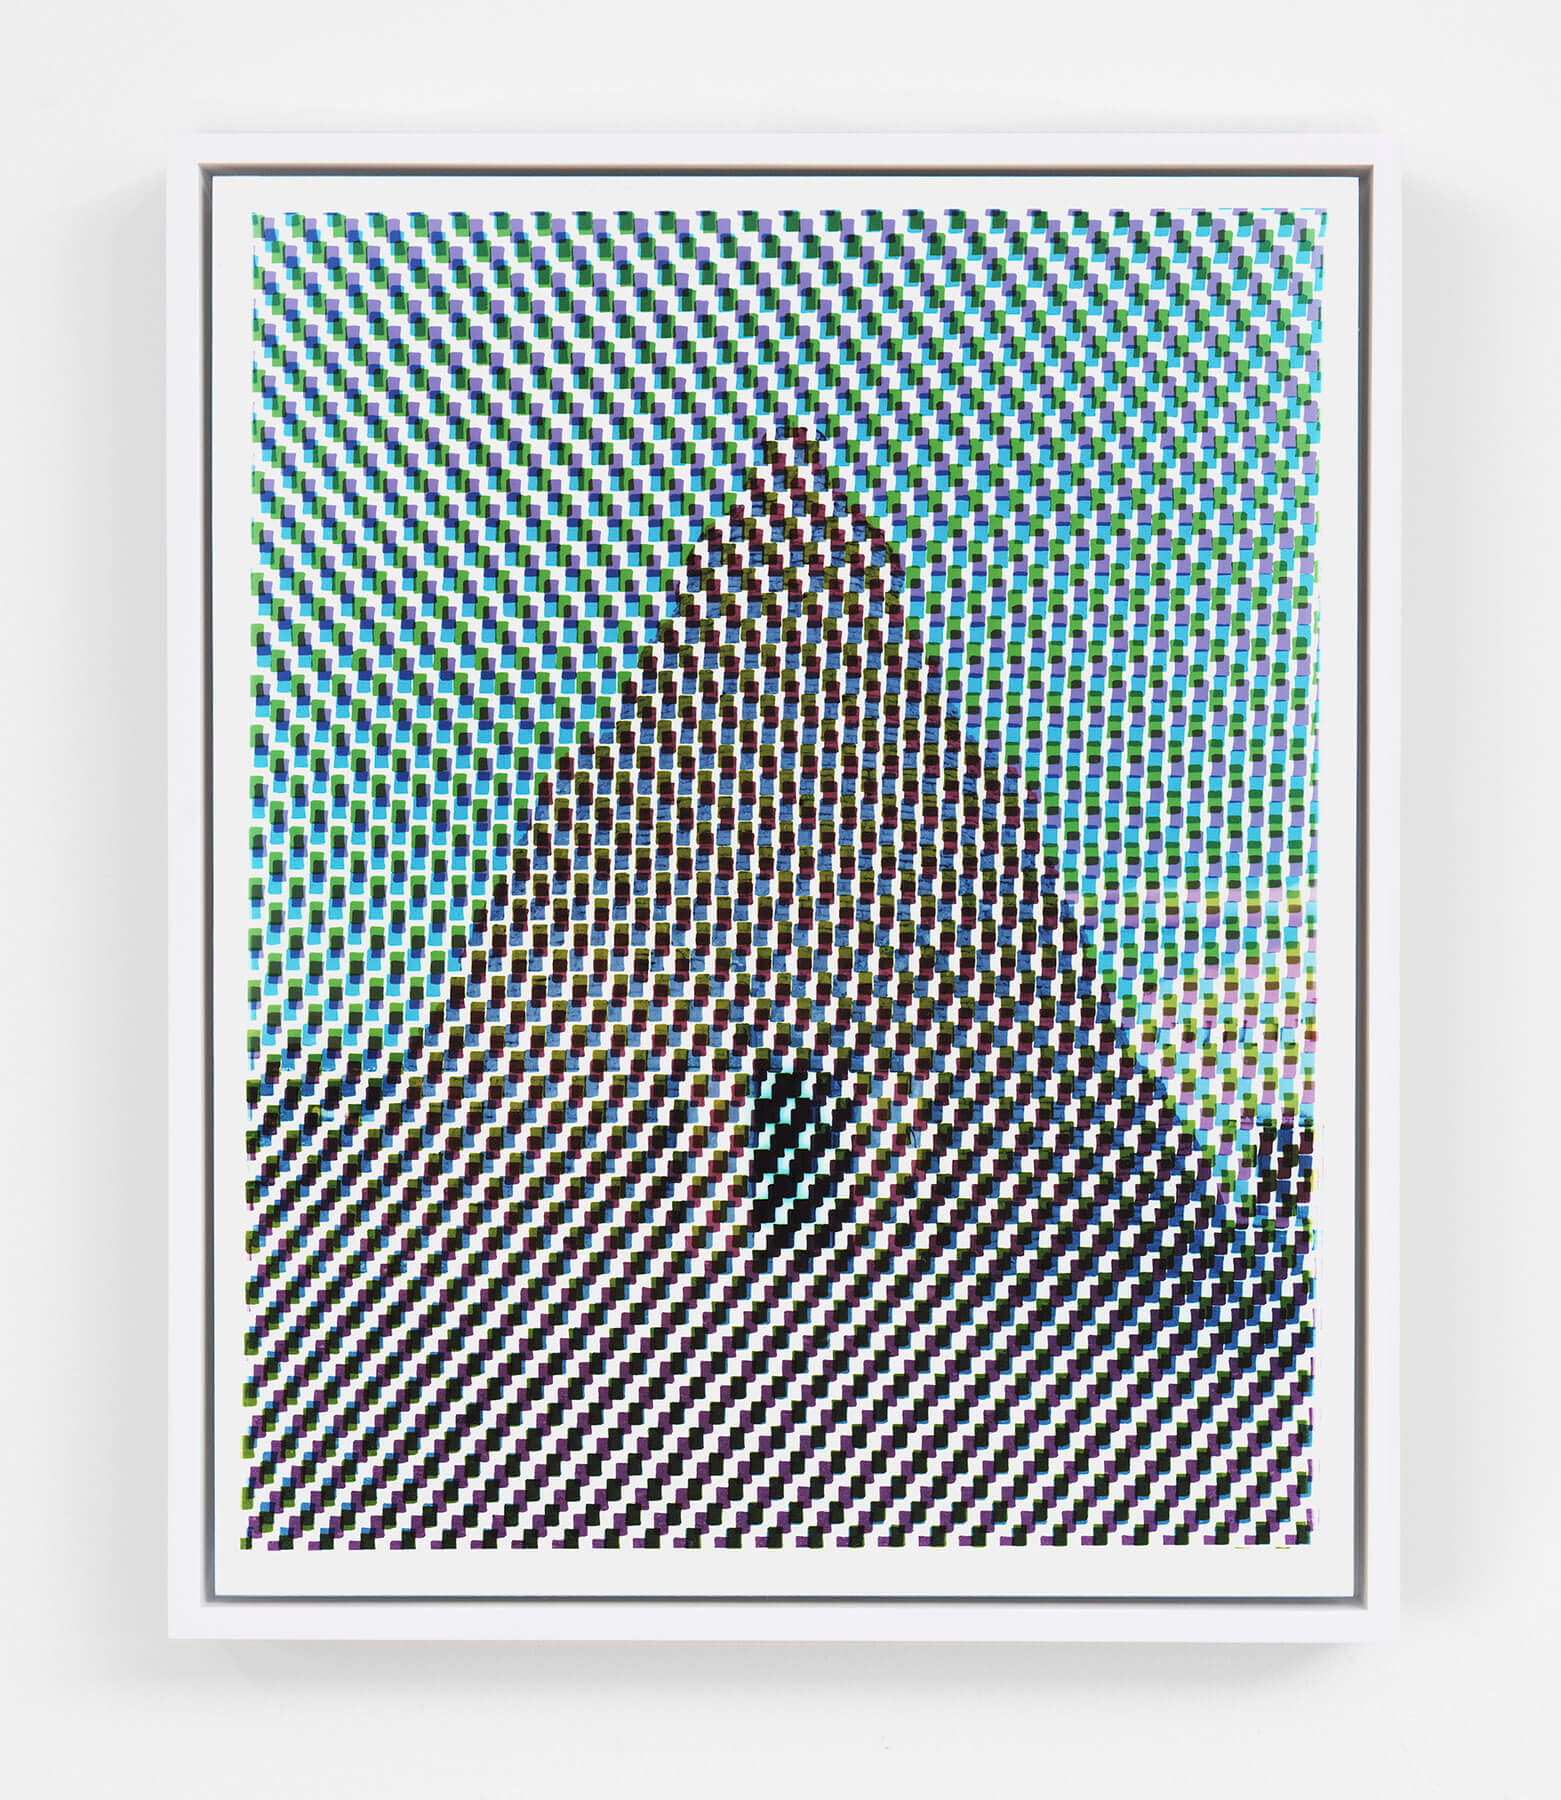 Livia Corona Benjamin
                                        'Infinite Rewrite III', 2015
                                        10 1/2 x 8 1/2 Inches
                                        unique analog C-print
                                        